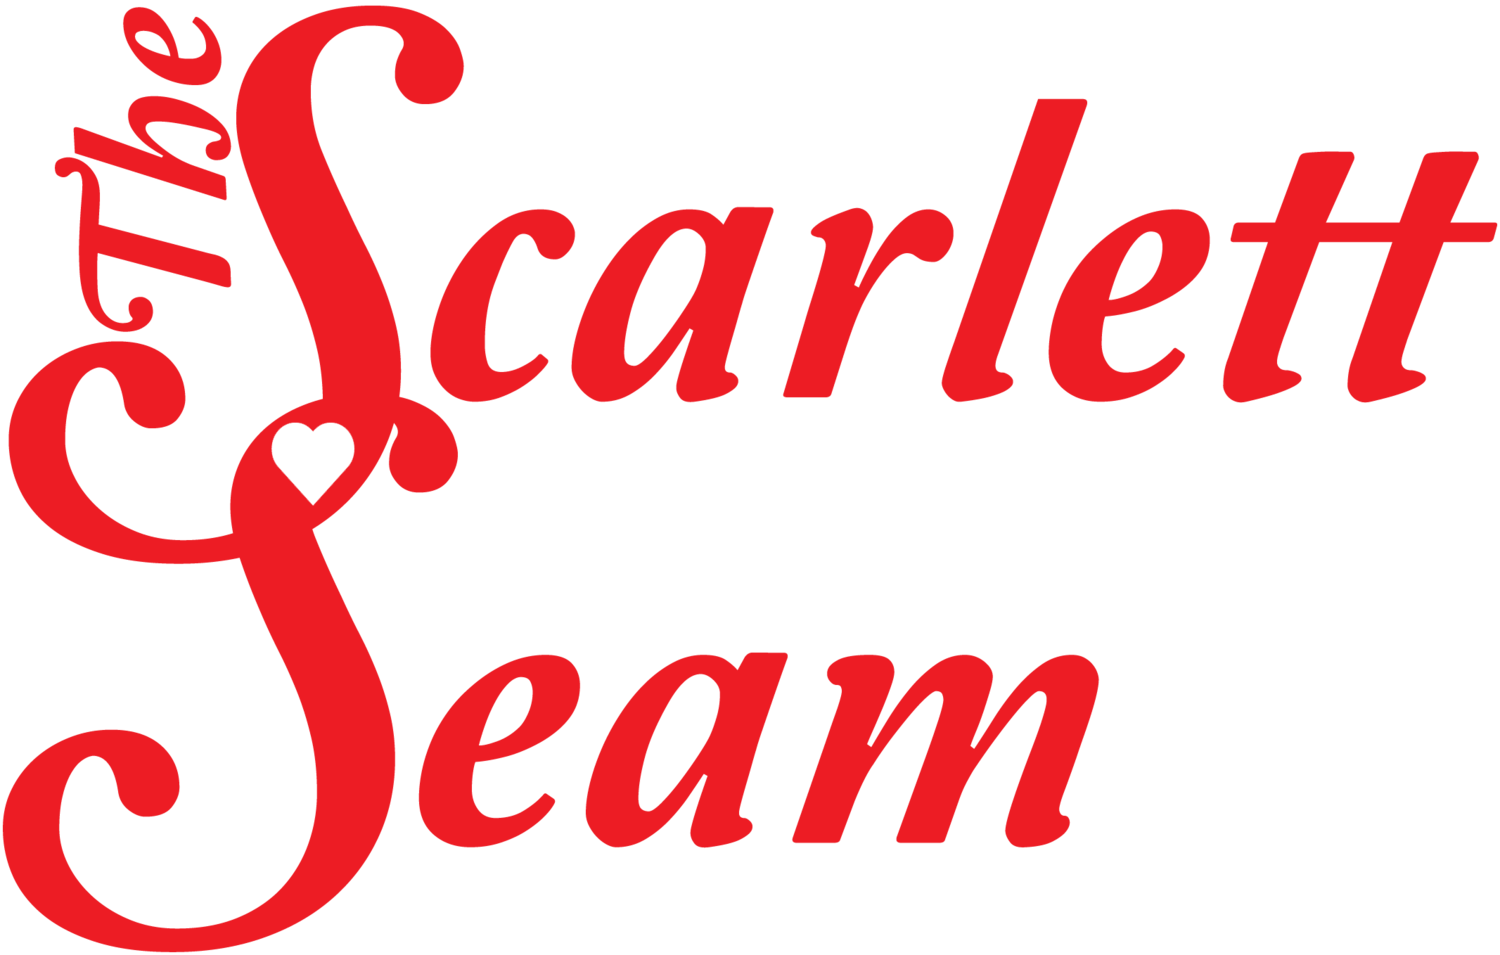 The Scarlett Seam